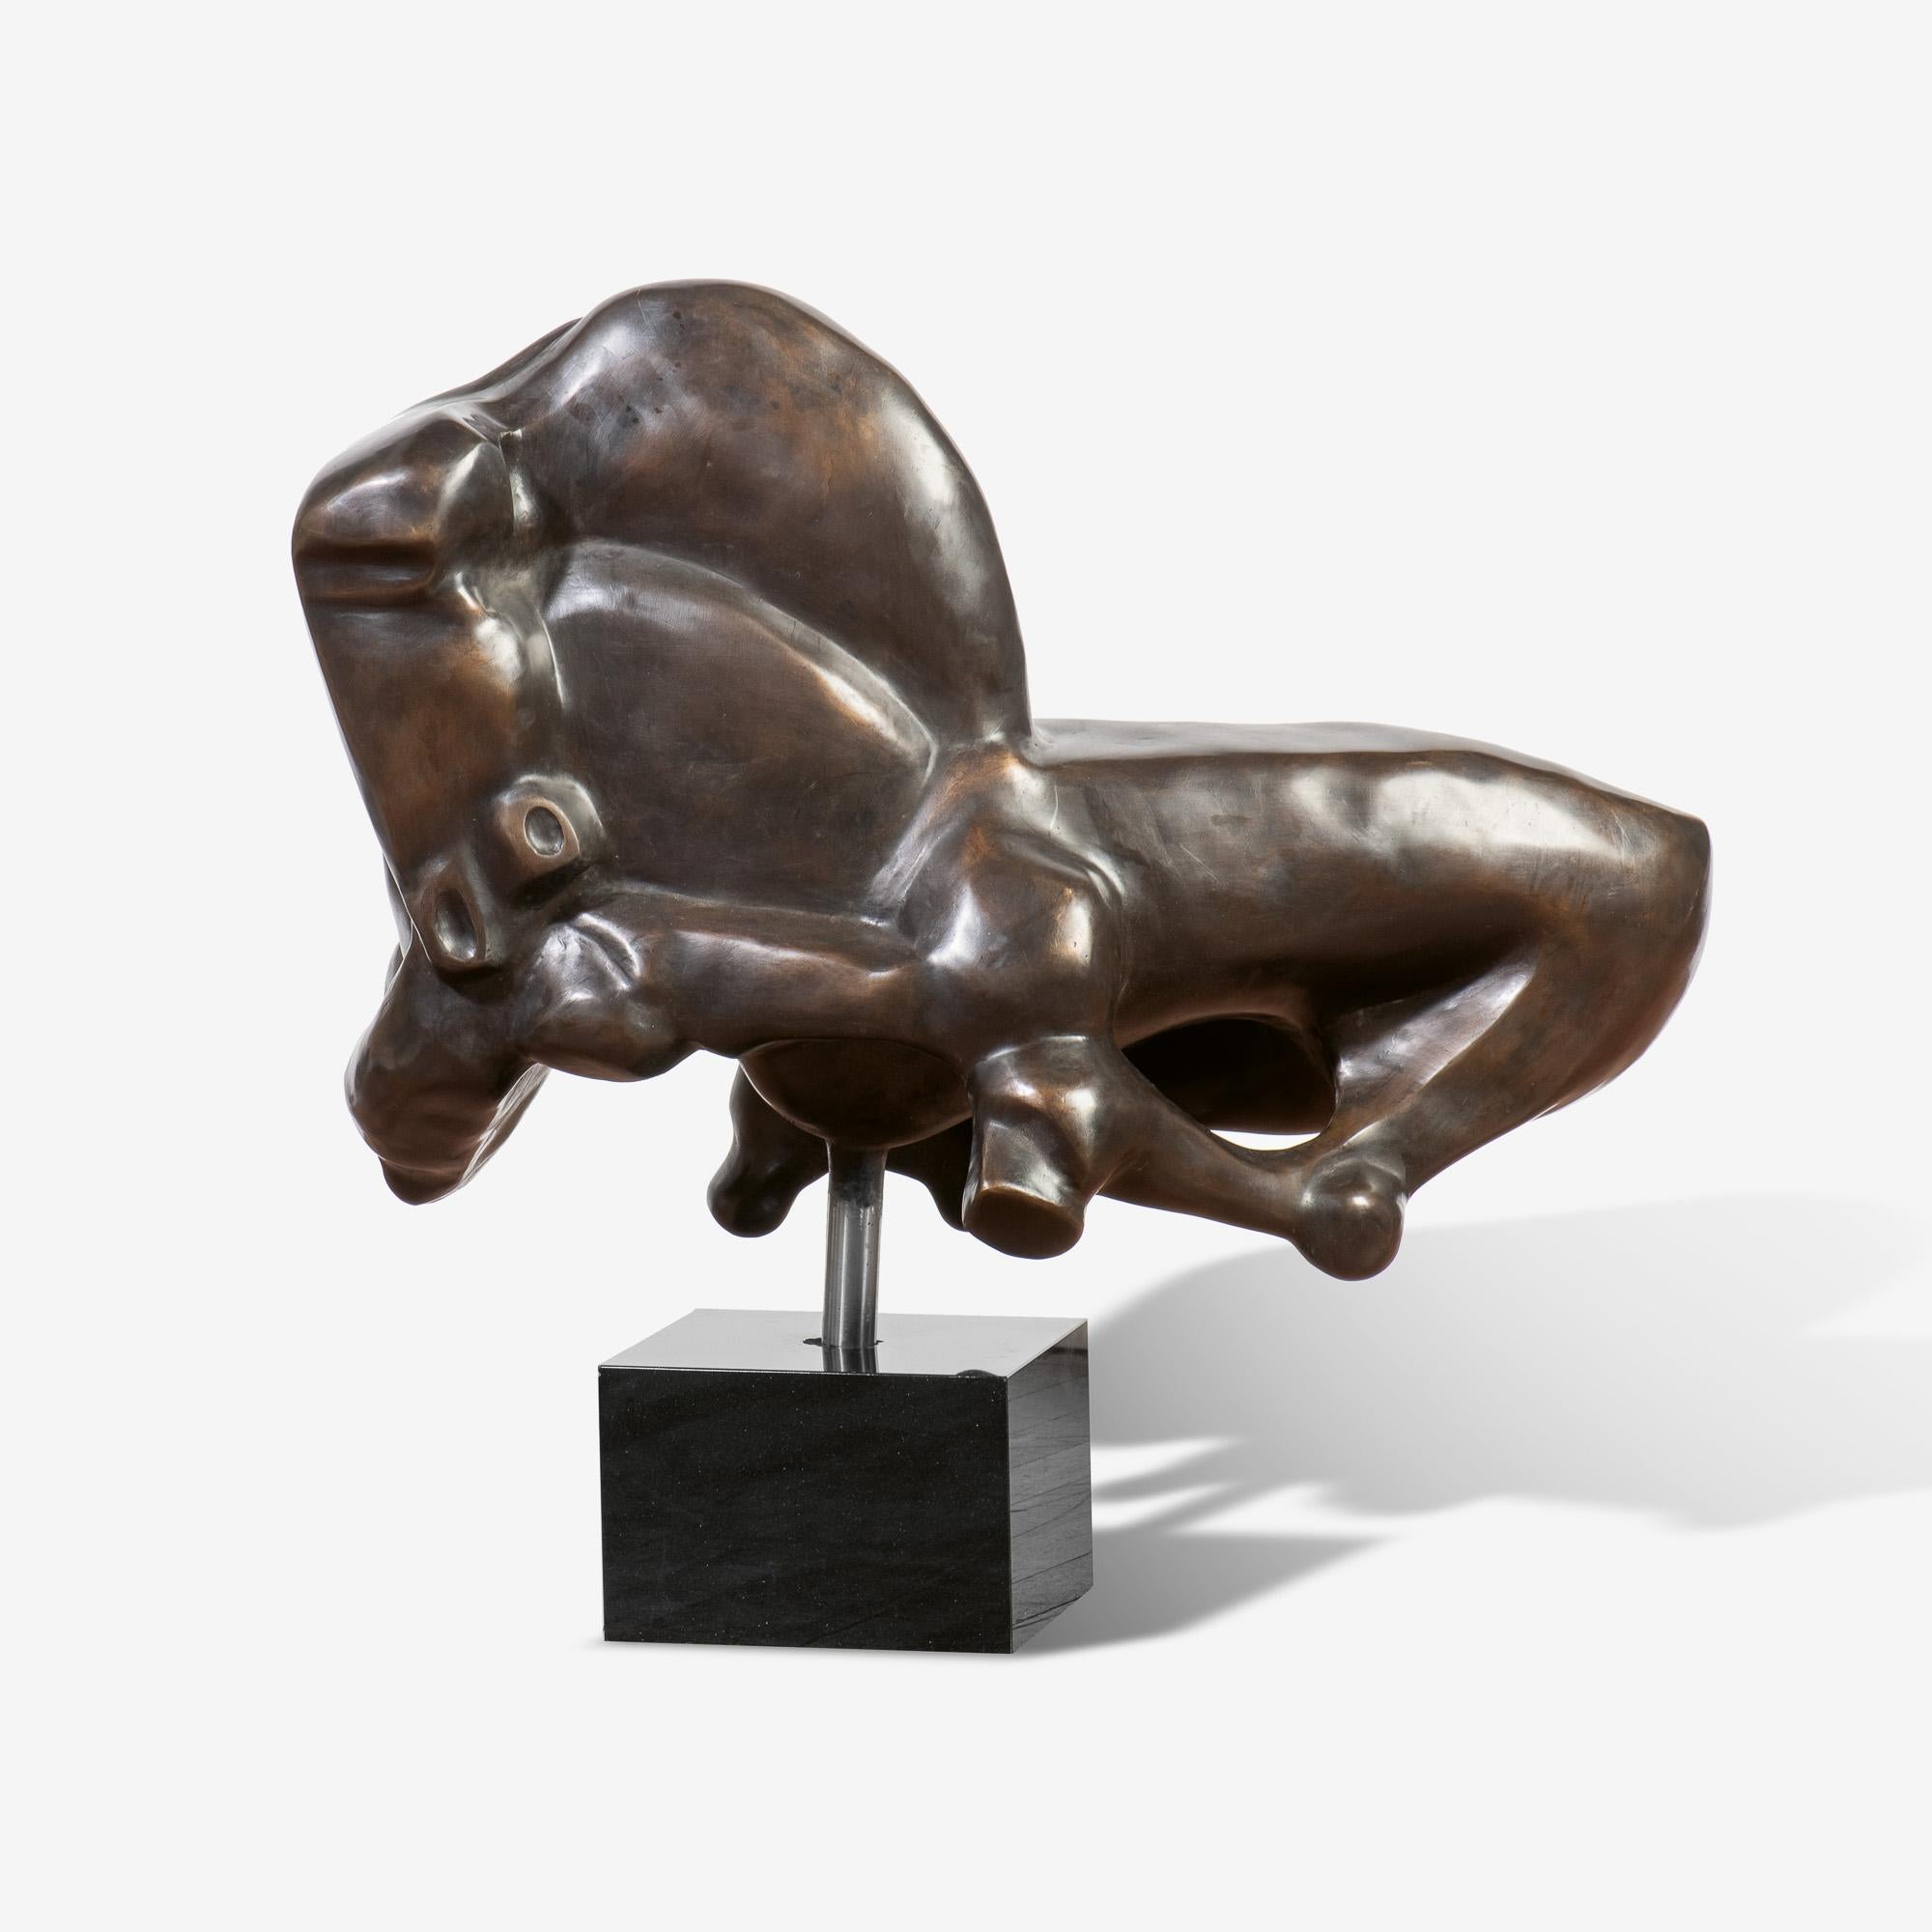 Theo Mackaay Figurative Sculpture - Amazone Bronze Sculpture Horse Animal In Stock